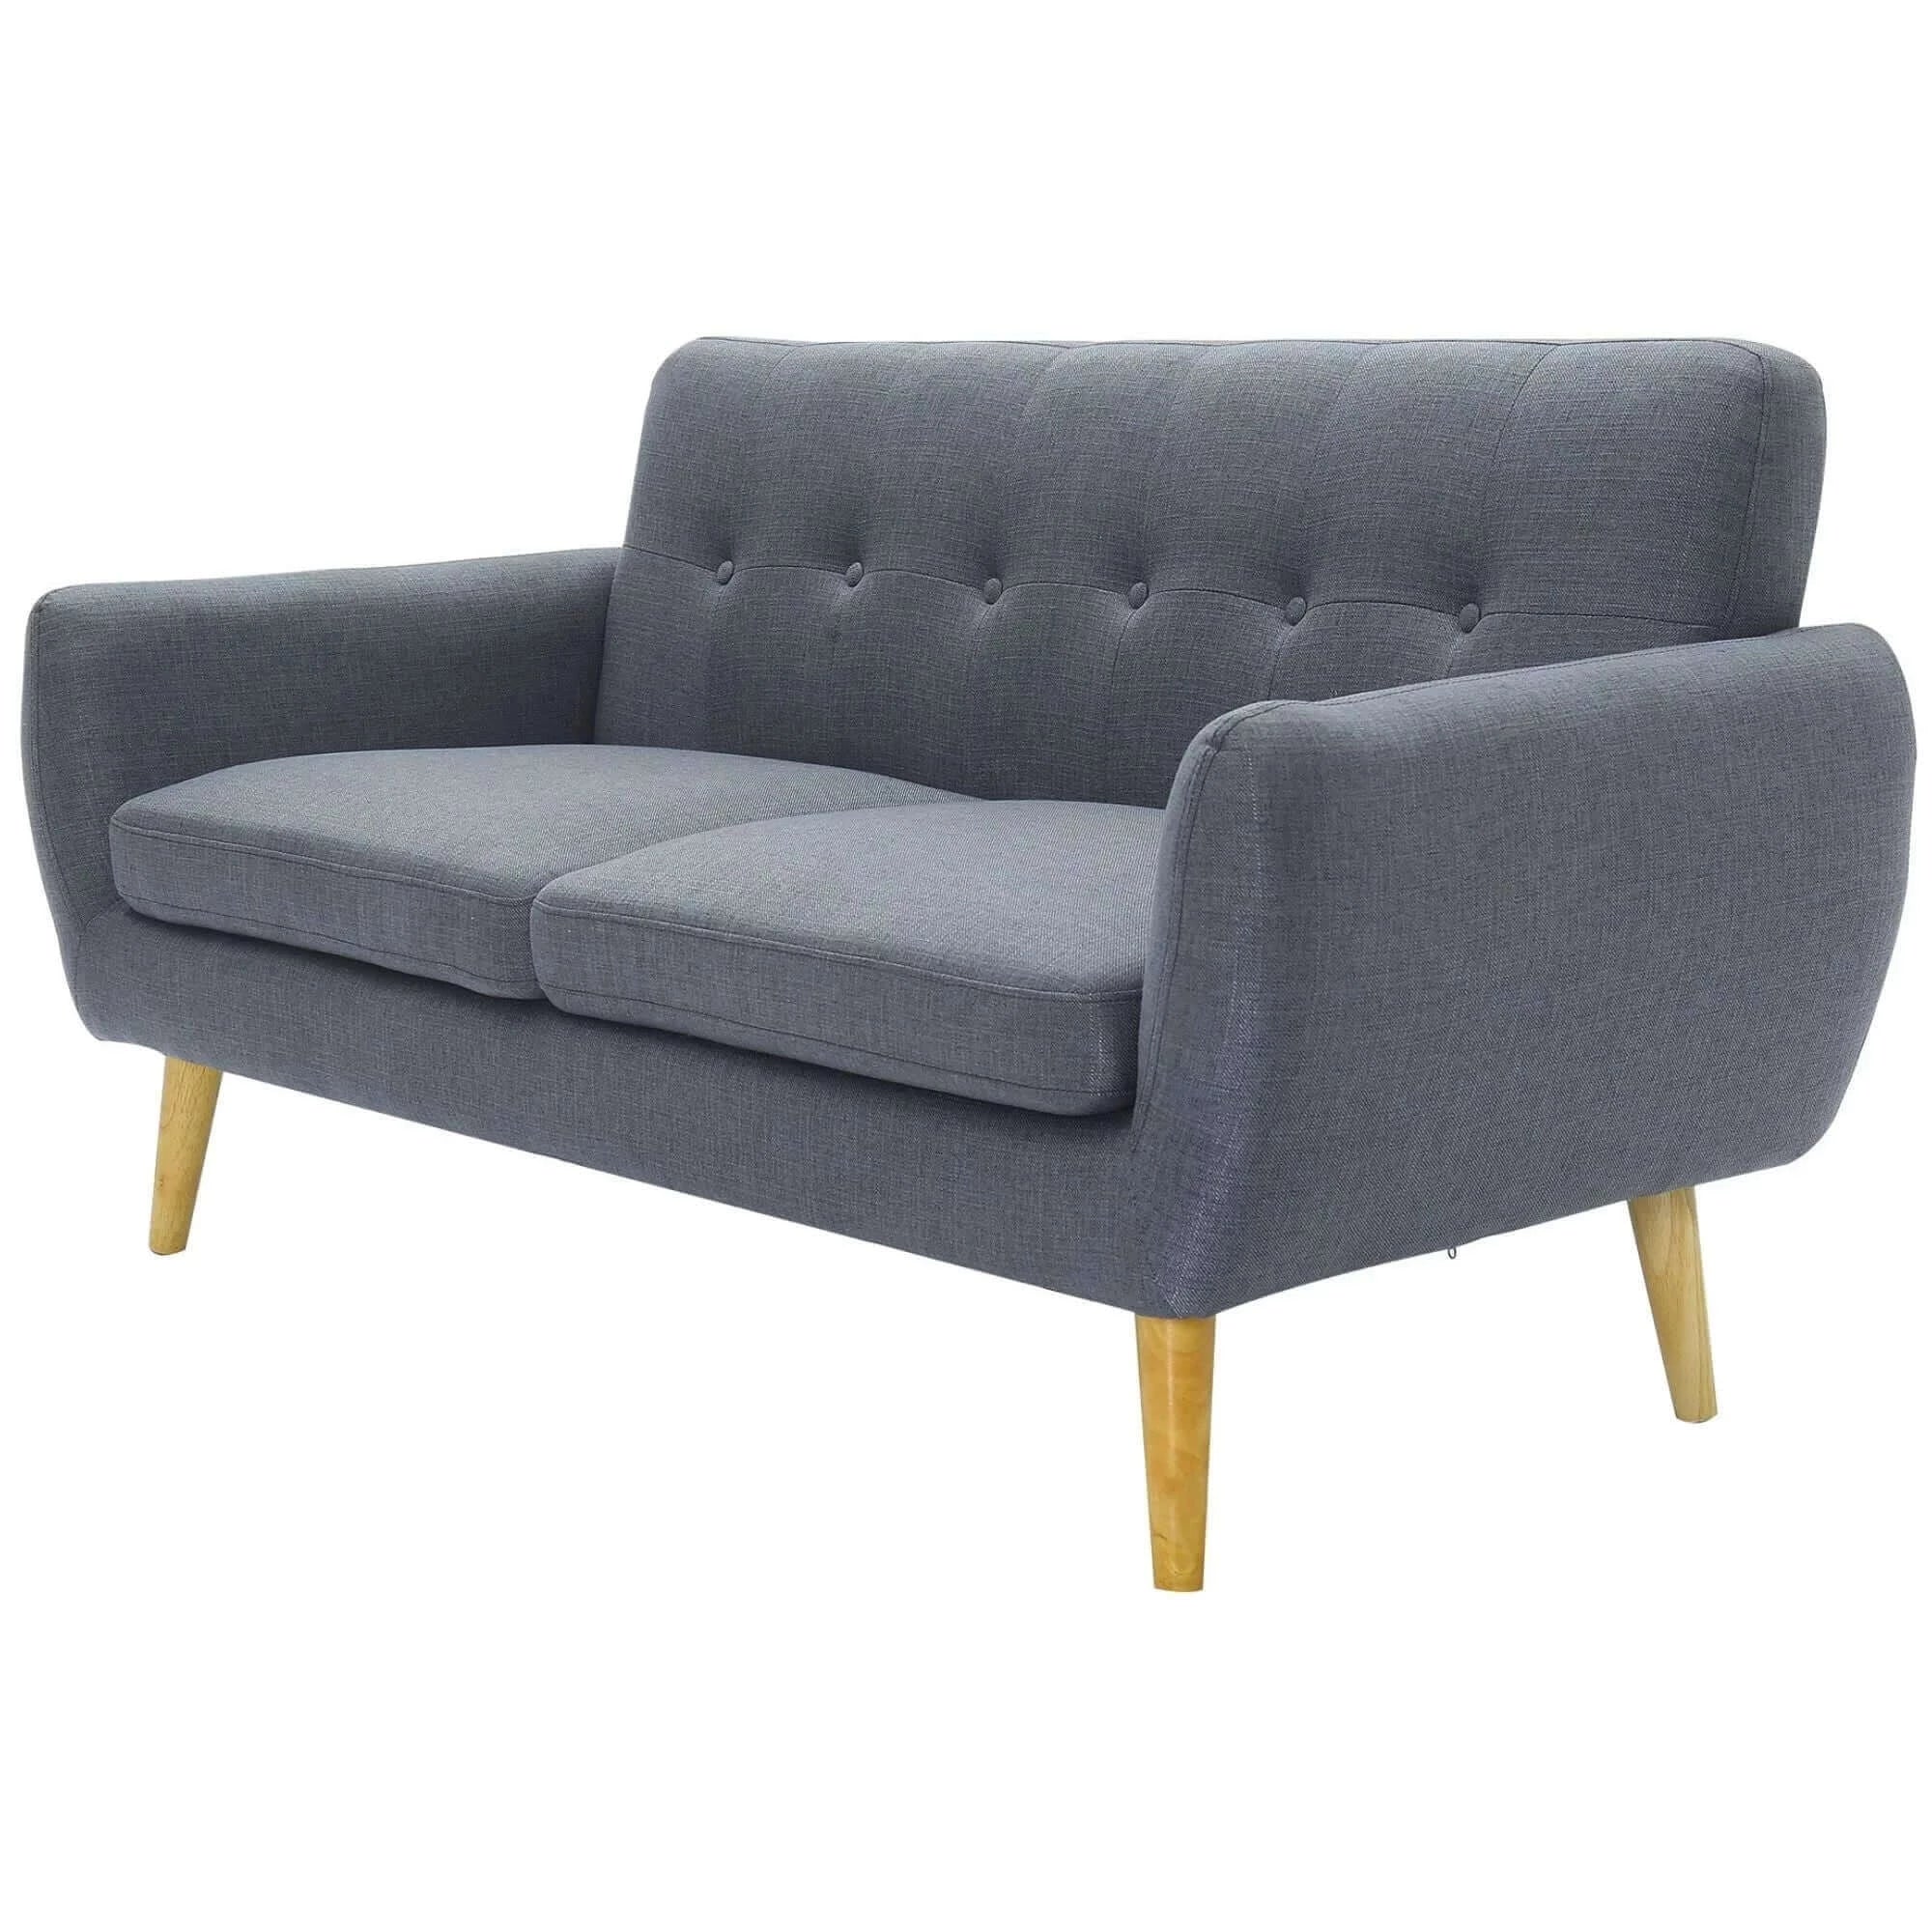 Buy dane 3 seater fabric upholstered sofa lounge couch - dark grey - upinteriors-Upinteriors